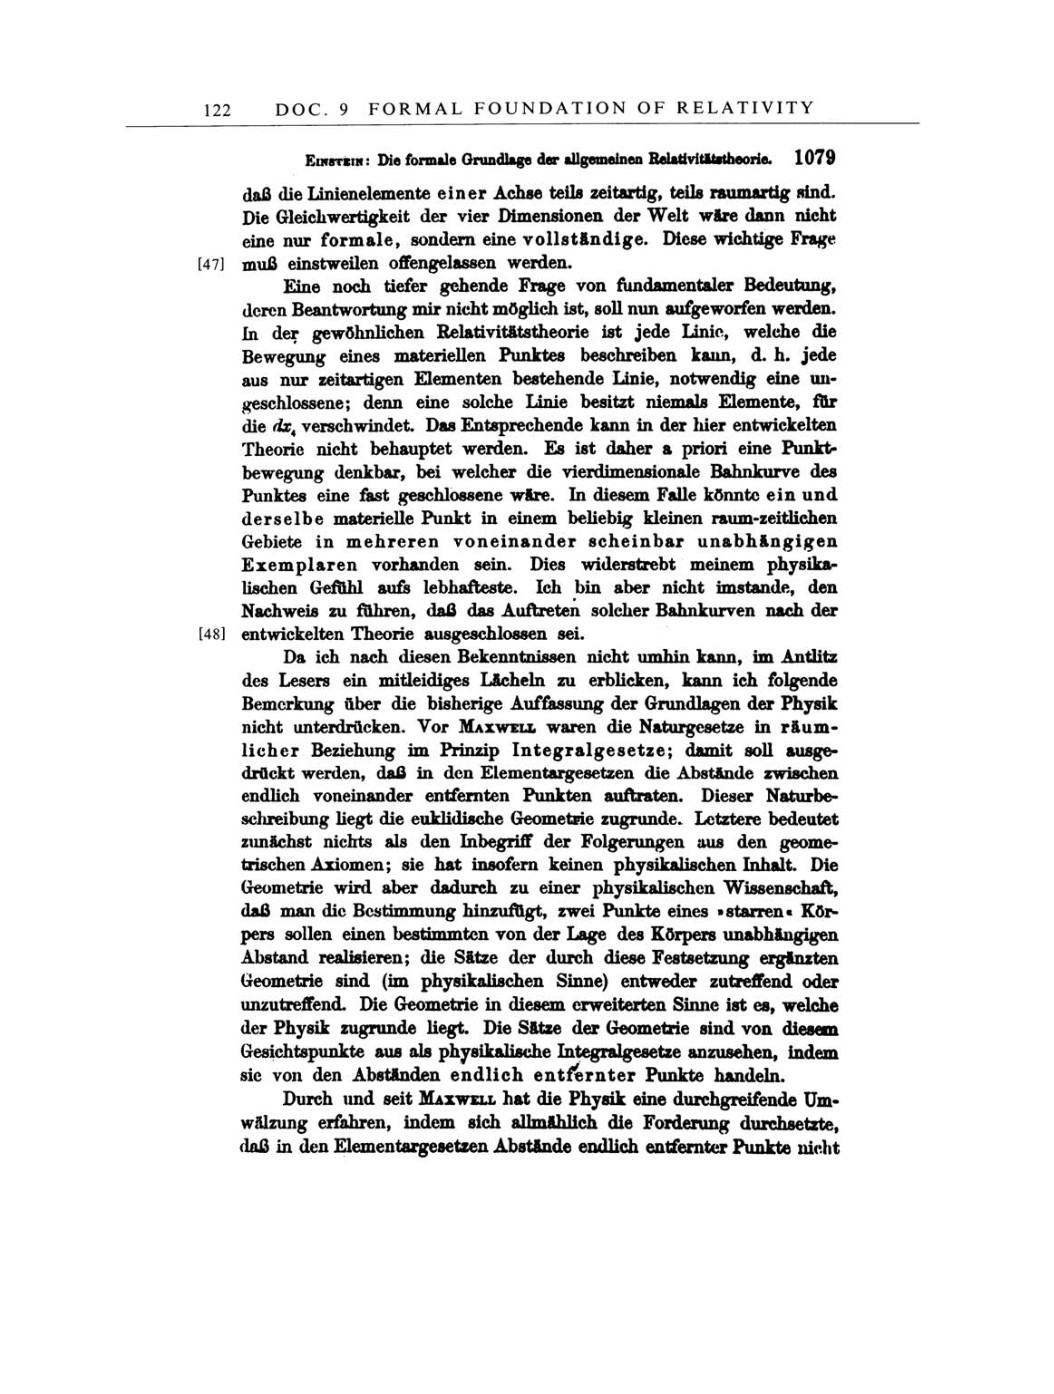 Volume 6: The Berlin Years: Writings, 1914-1917 page 122